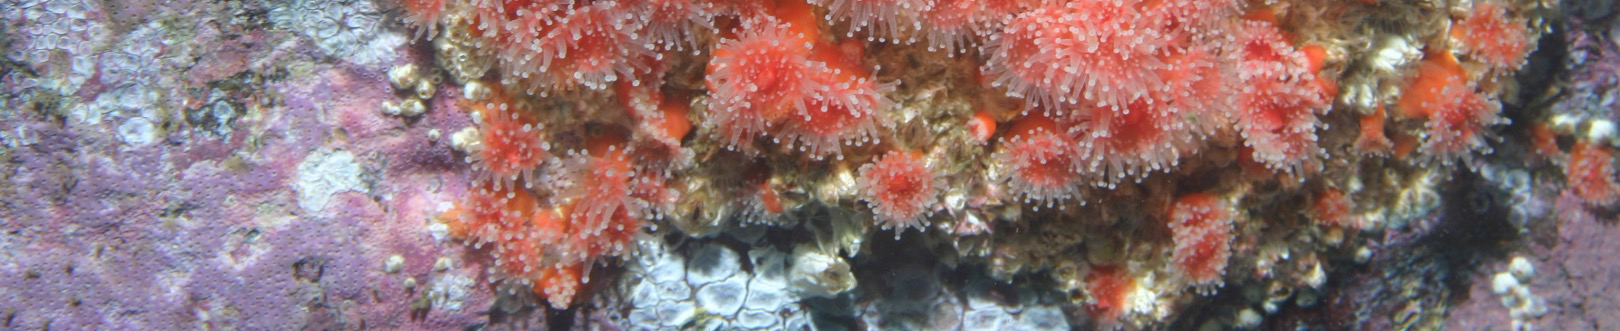 anemones, coralline algae and barnacles